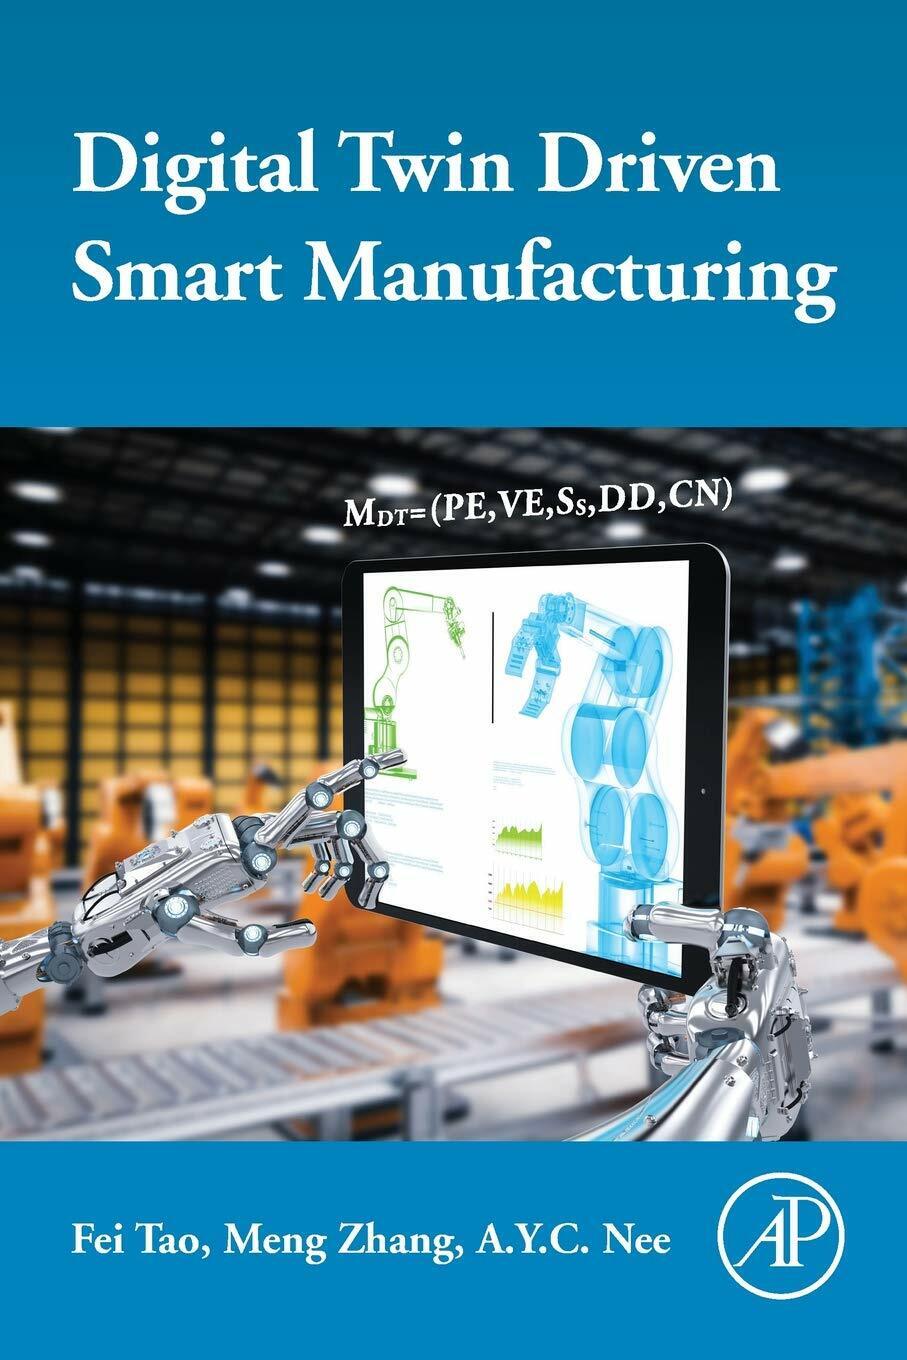 Digital Twin Driven Smart Manufacturing - Academic, 2019